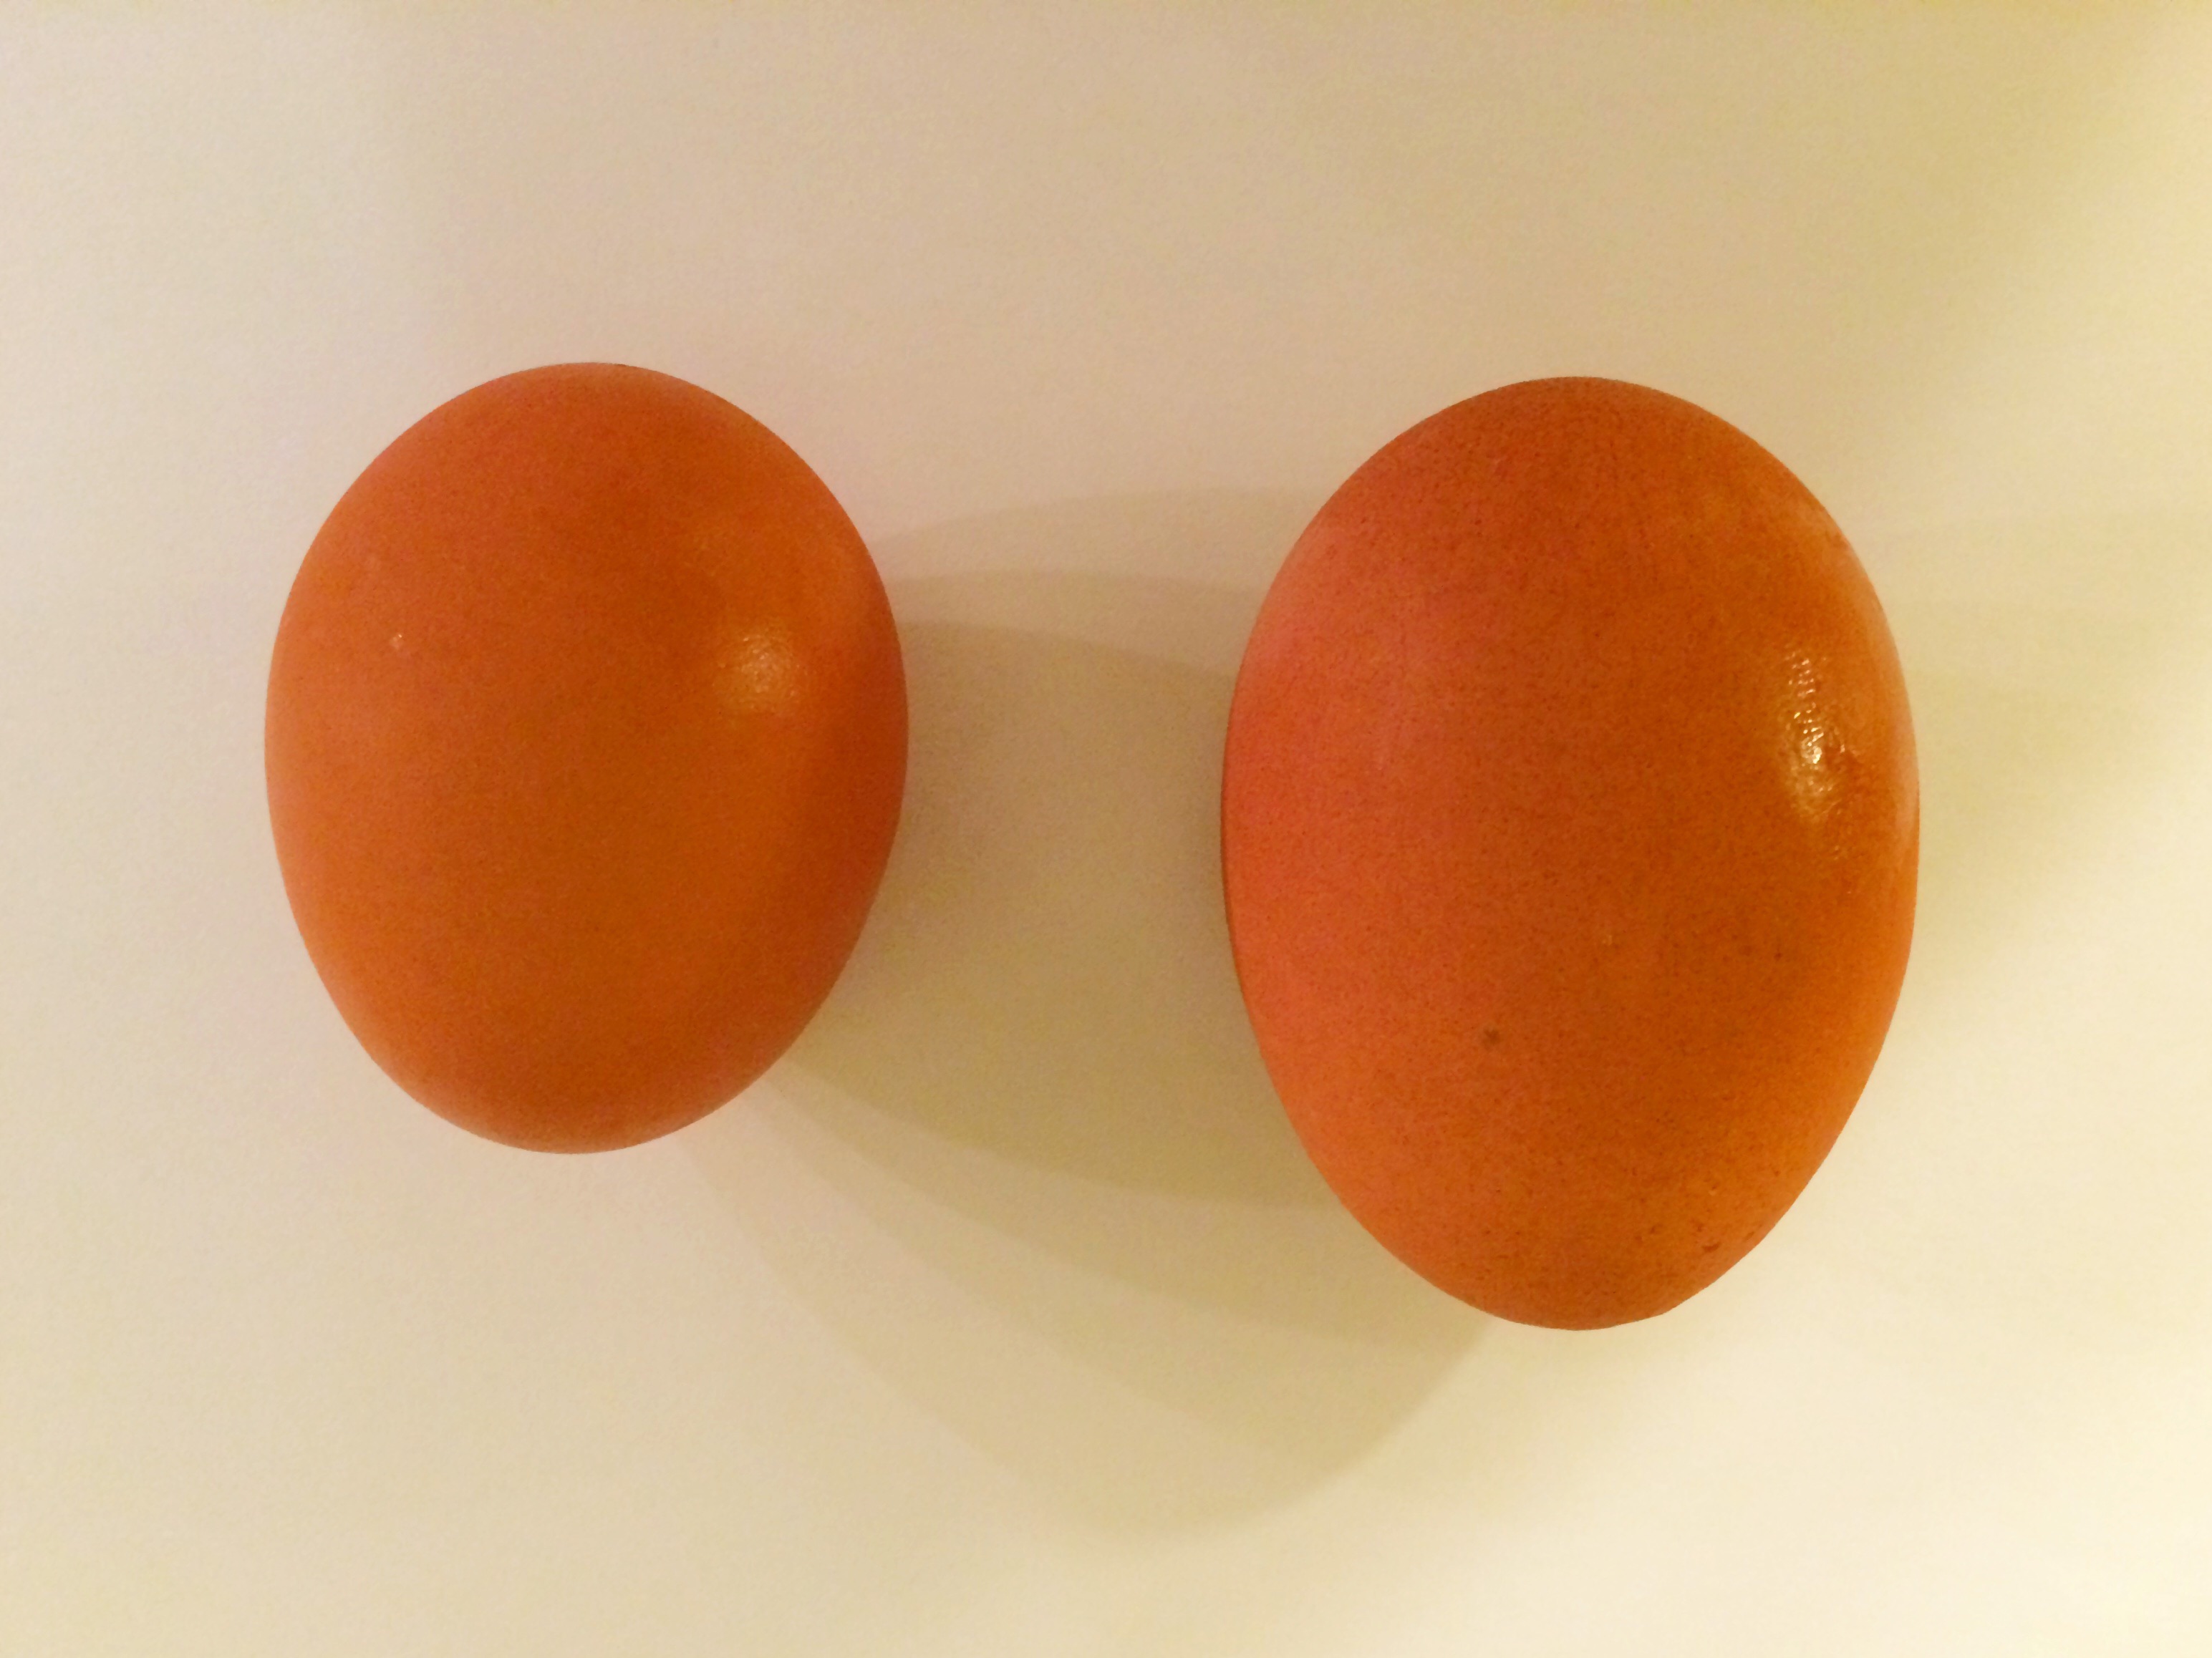 Egg and maxi egg 1